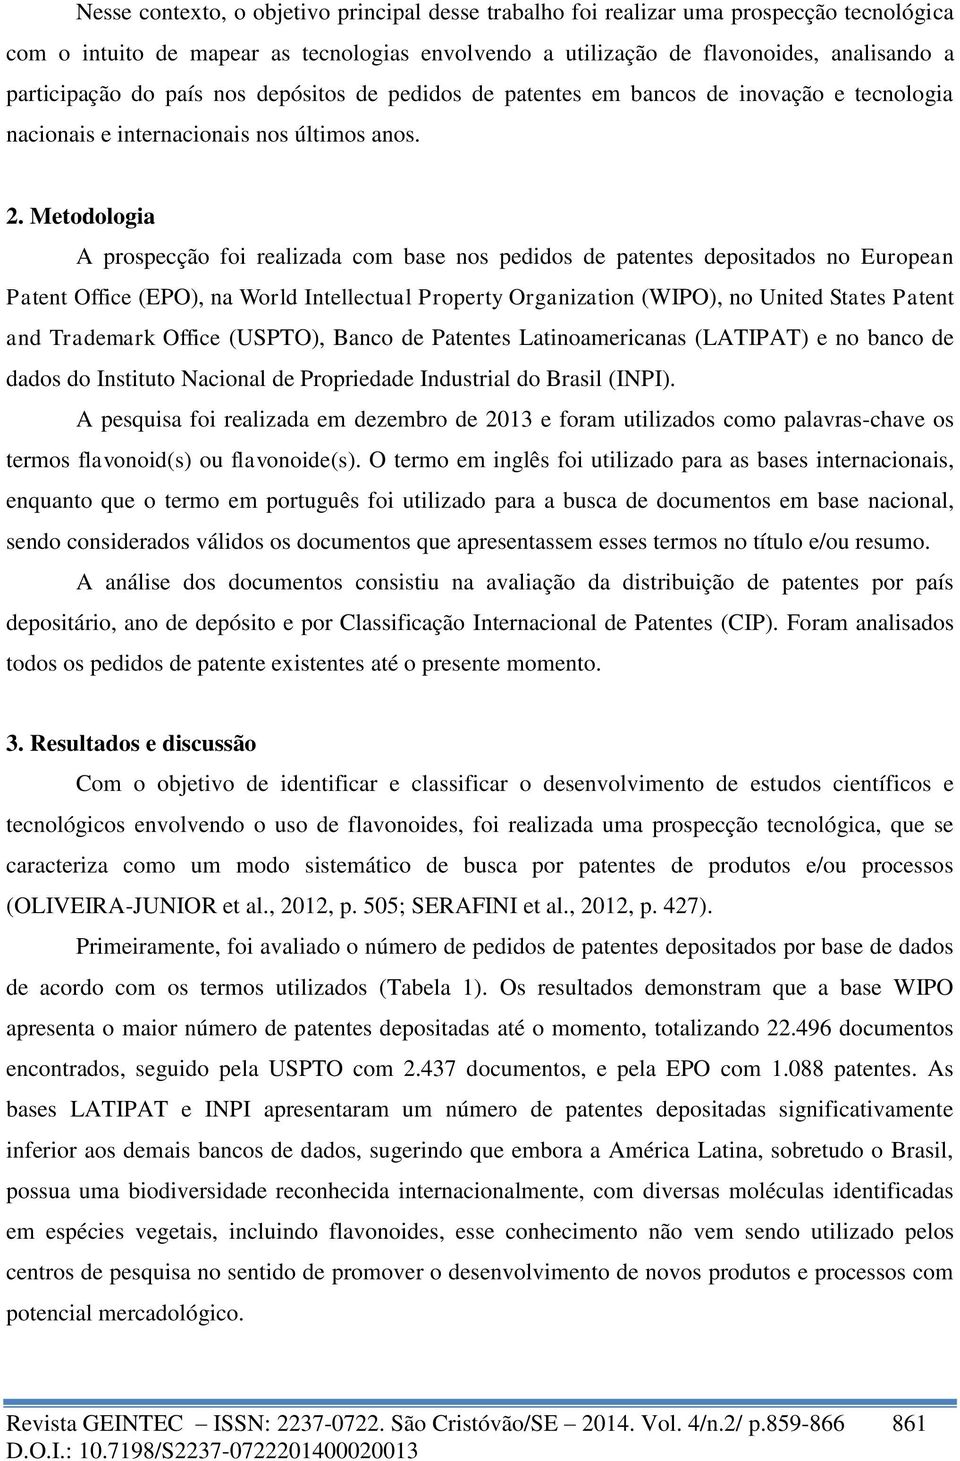 Metodologia A prospecção foi realizada com base nos pedidos de patentes depositados no European Patent Office (EPO), na World Intellectual Property Organization (WIPO), no United States Patent and